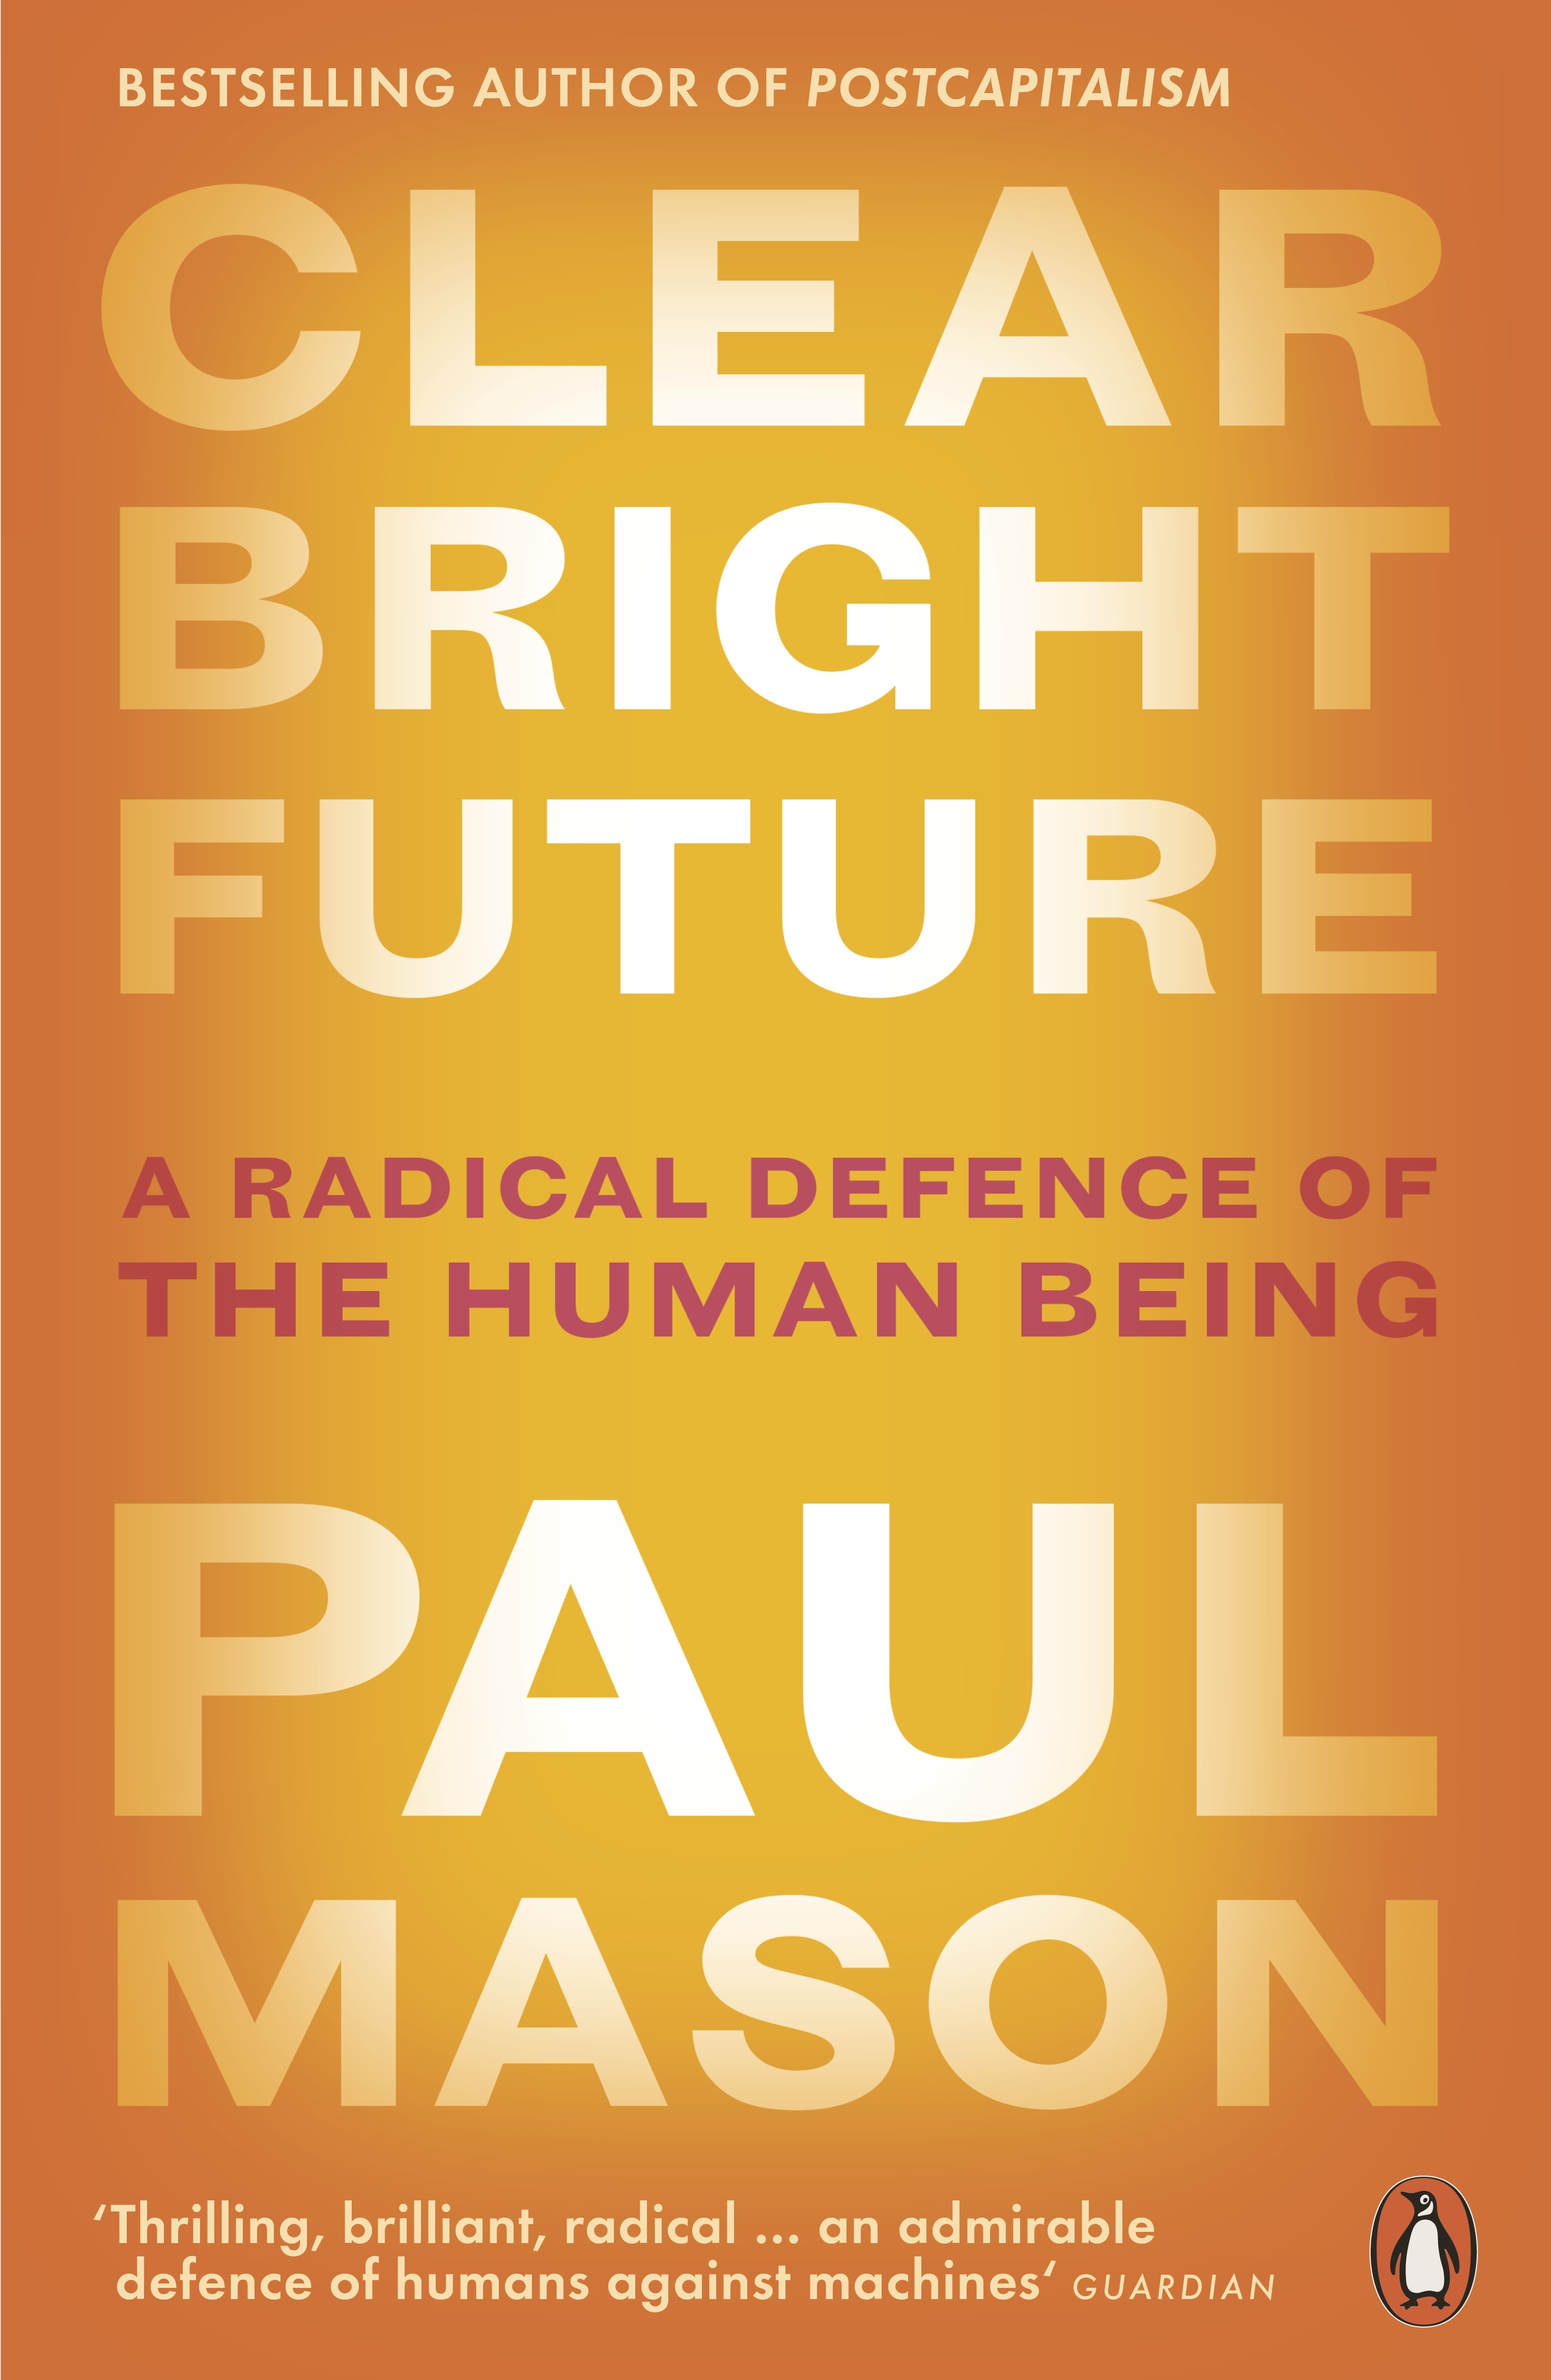 Book “Clear Bright Future” by Paul Mason — February 6, 2020